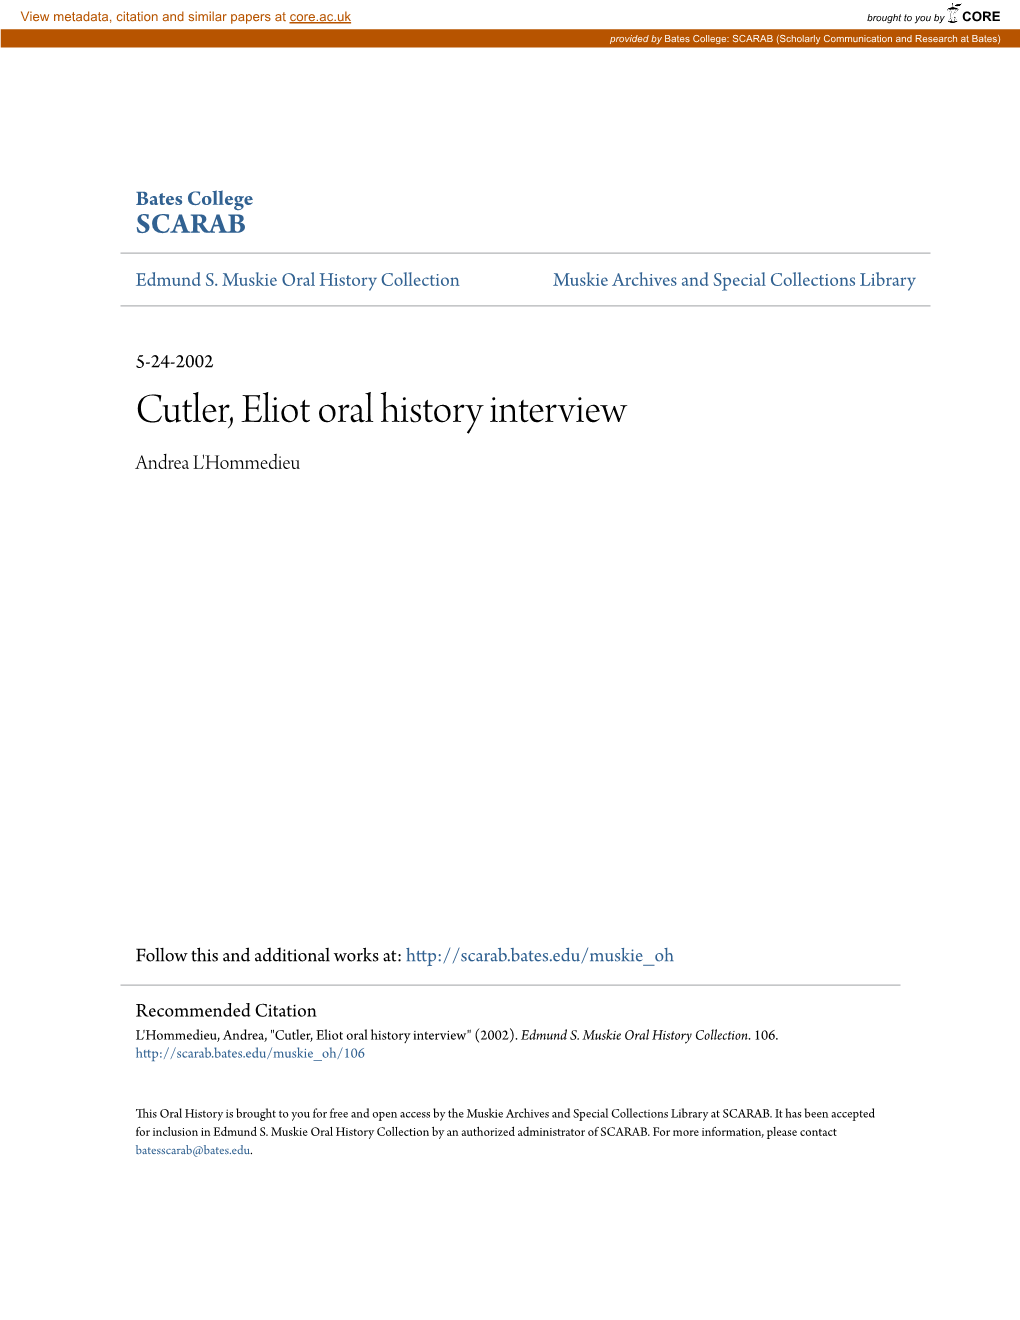 Cutler, Eliot Oral History Interview Andrea L'hommedieu